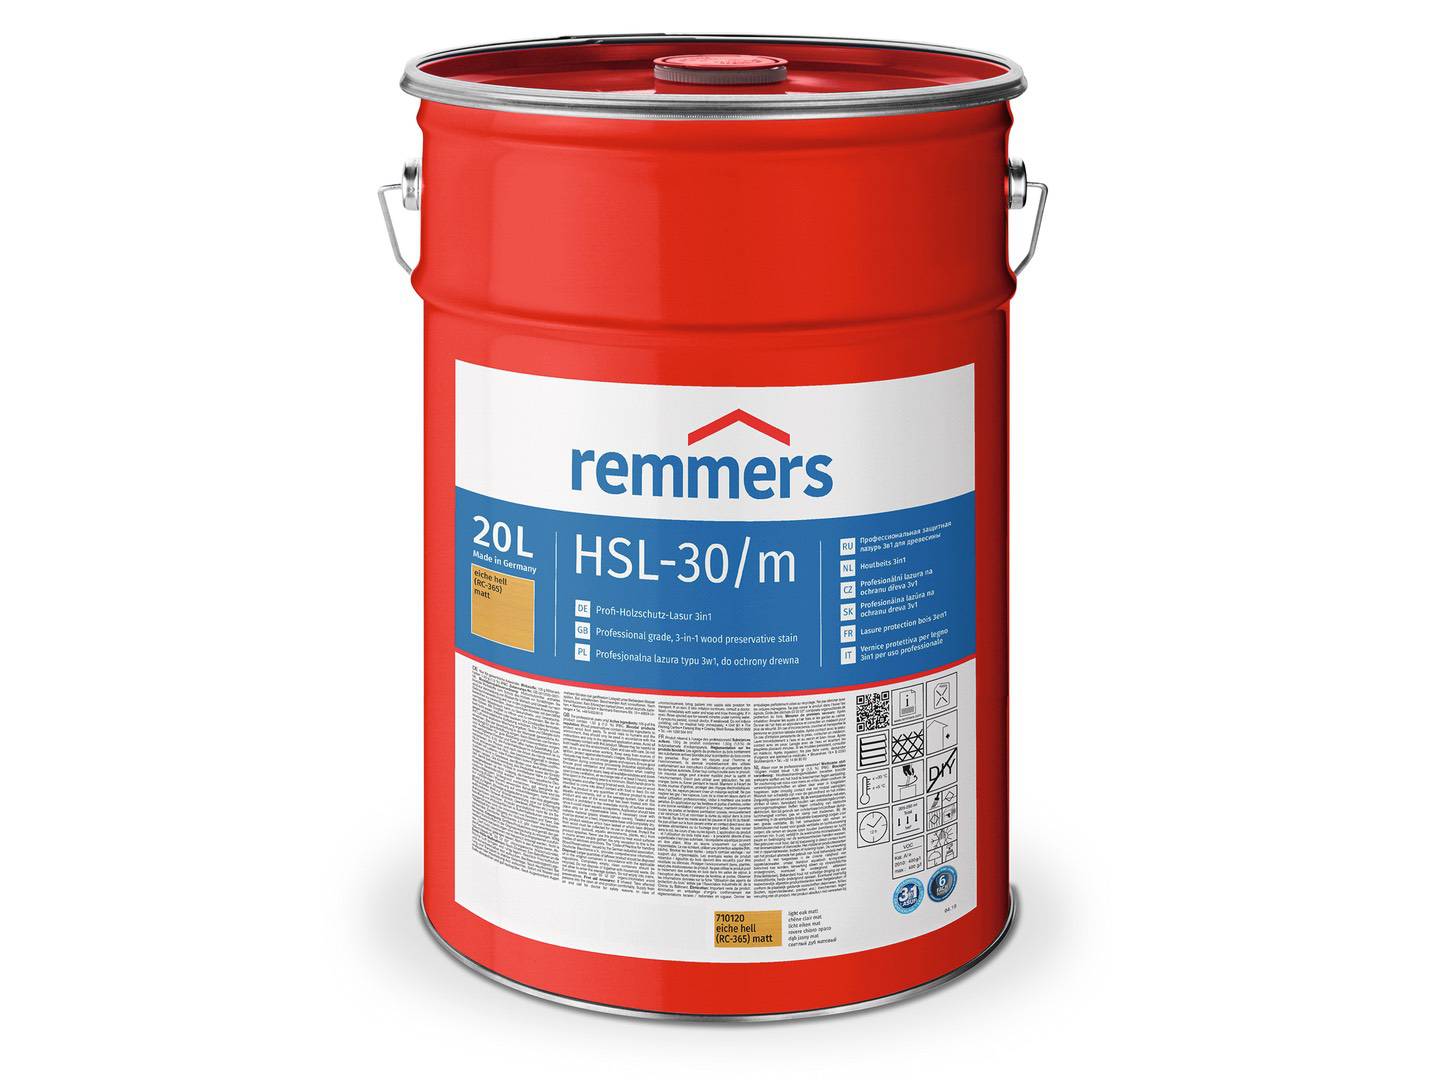 REMMERS HSL-30/m-Profi-Holzschutz-Lasur 3in1 mahagoni (RC-565) matt 20 l